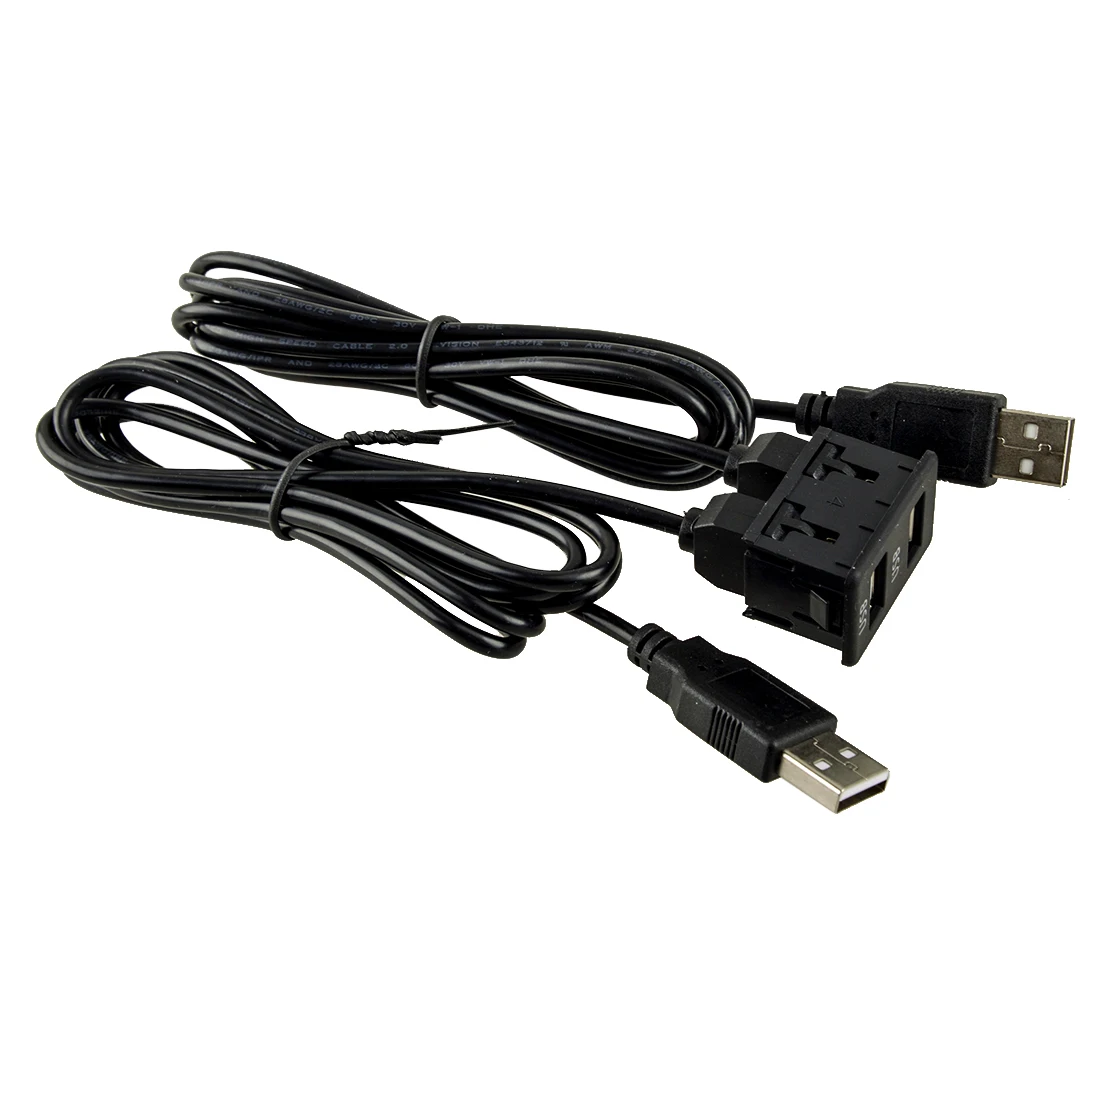 100CM Black Dash Flush Mount Dual USB Port Panel Extension Adapter Cable for Universal Cars Bikes Marines Motors